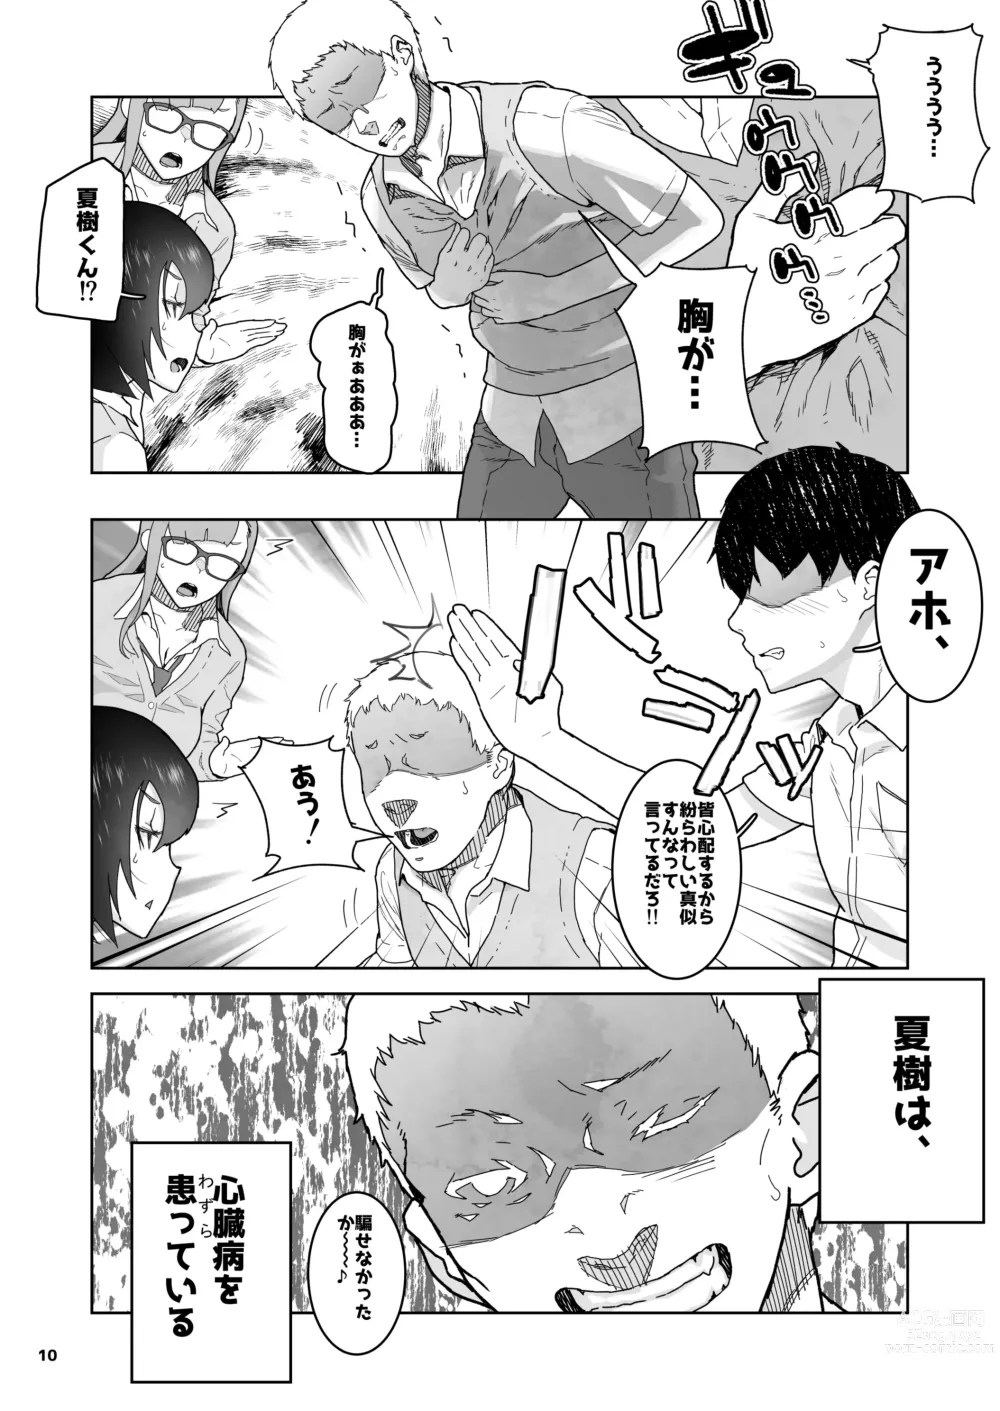 Page 10 of doujinshi Tomodachi no Shuwari